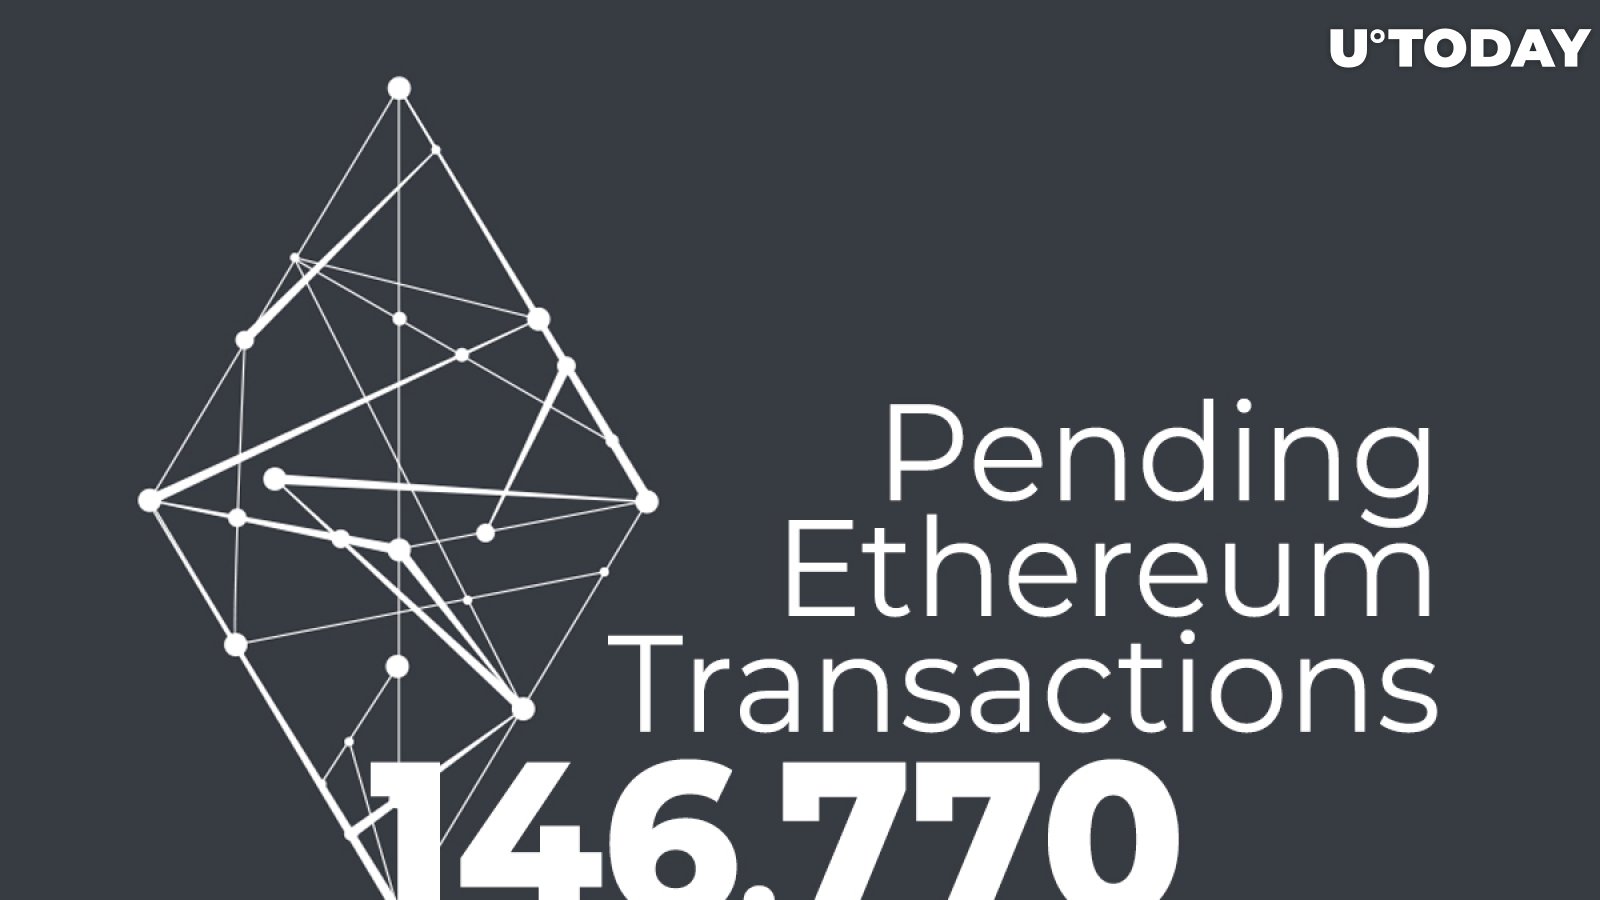 Pending Ethereum Transactions Reach 165,711, as Massive DeFi Demand Clogs Network